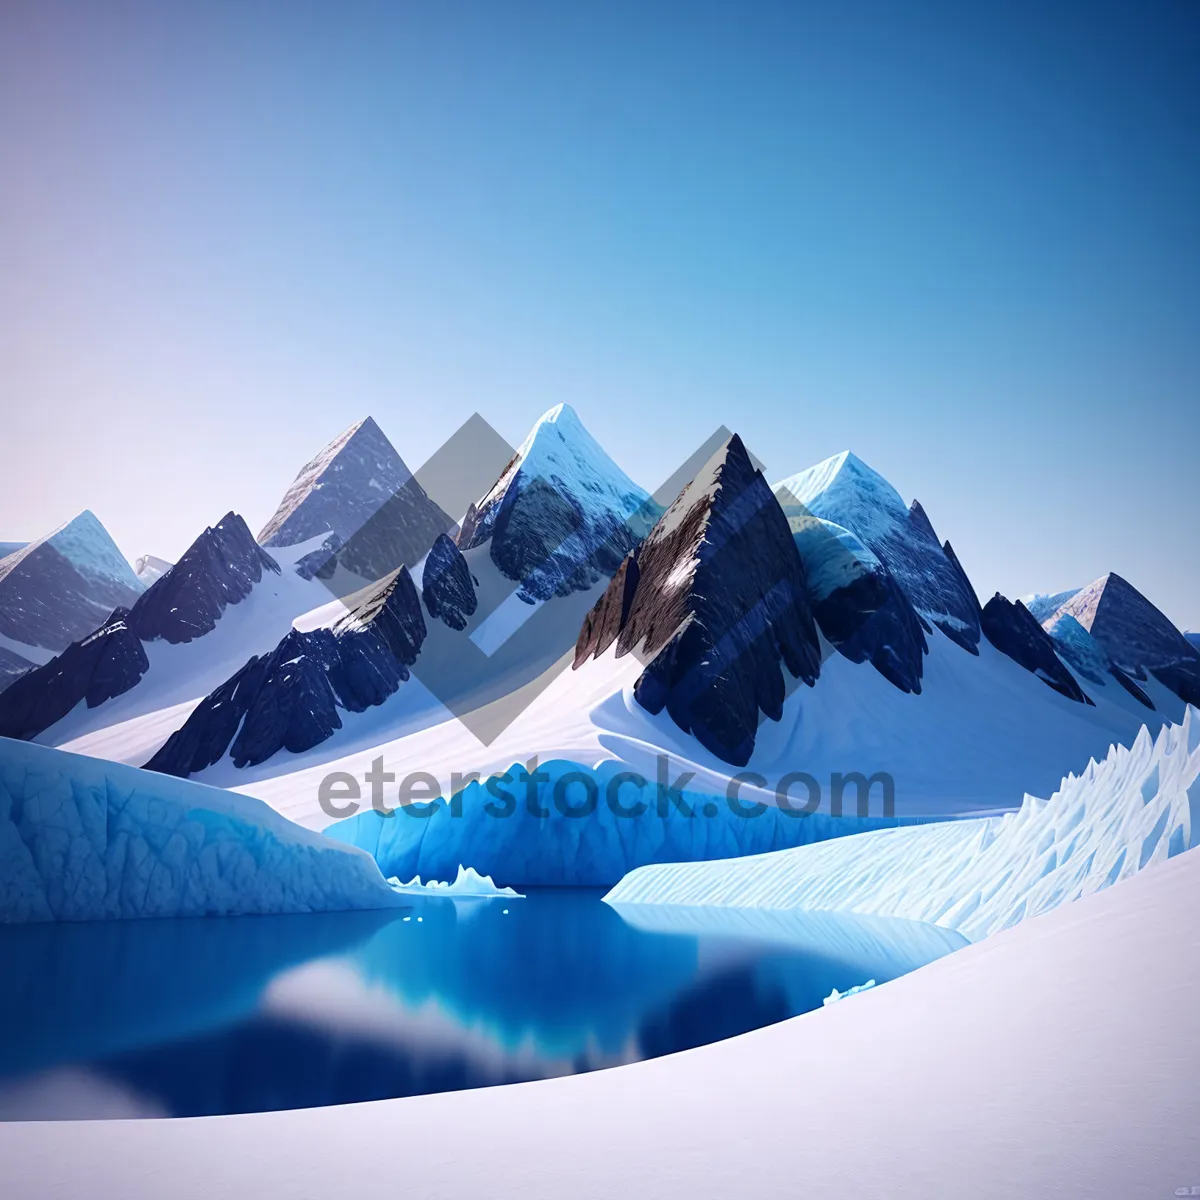 Picture of Majestic Snowy Glacier Peak in Winter Wonderland